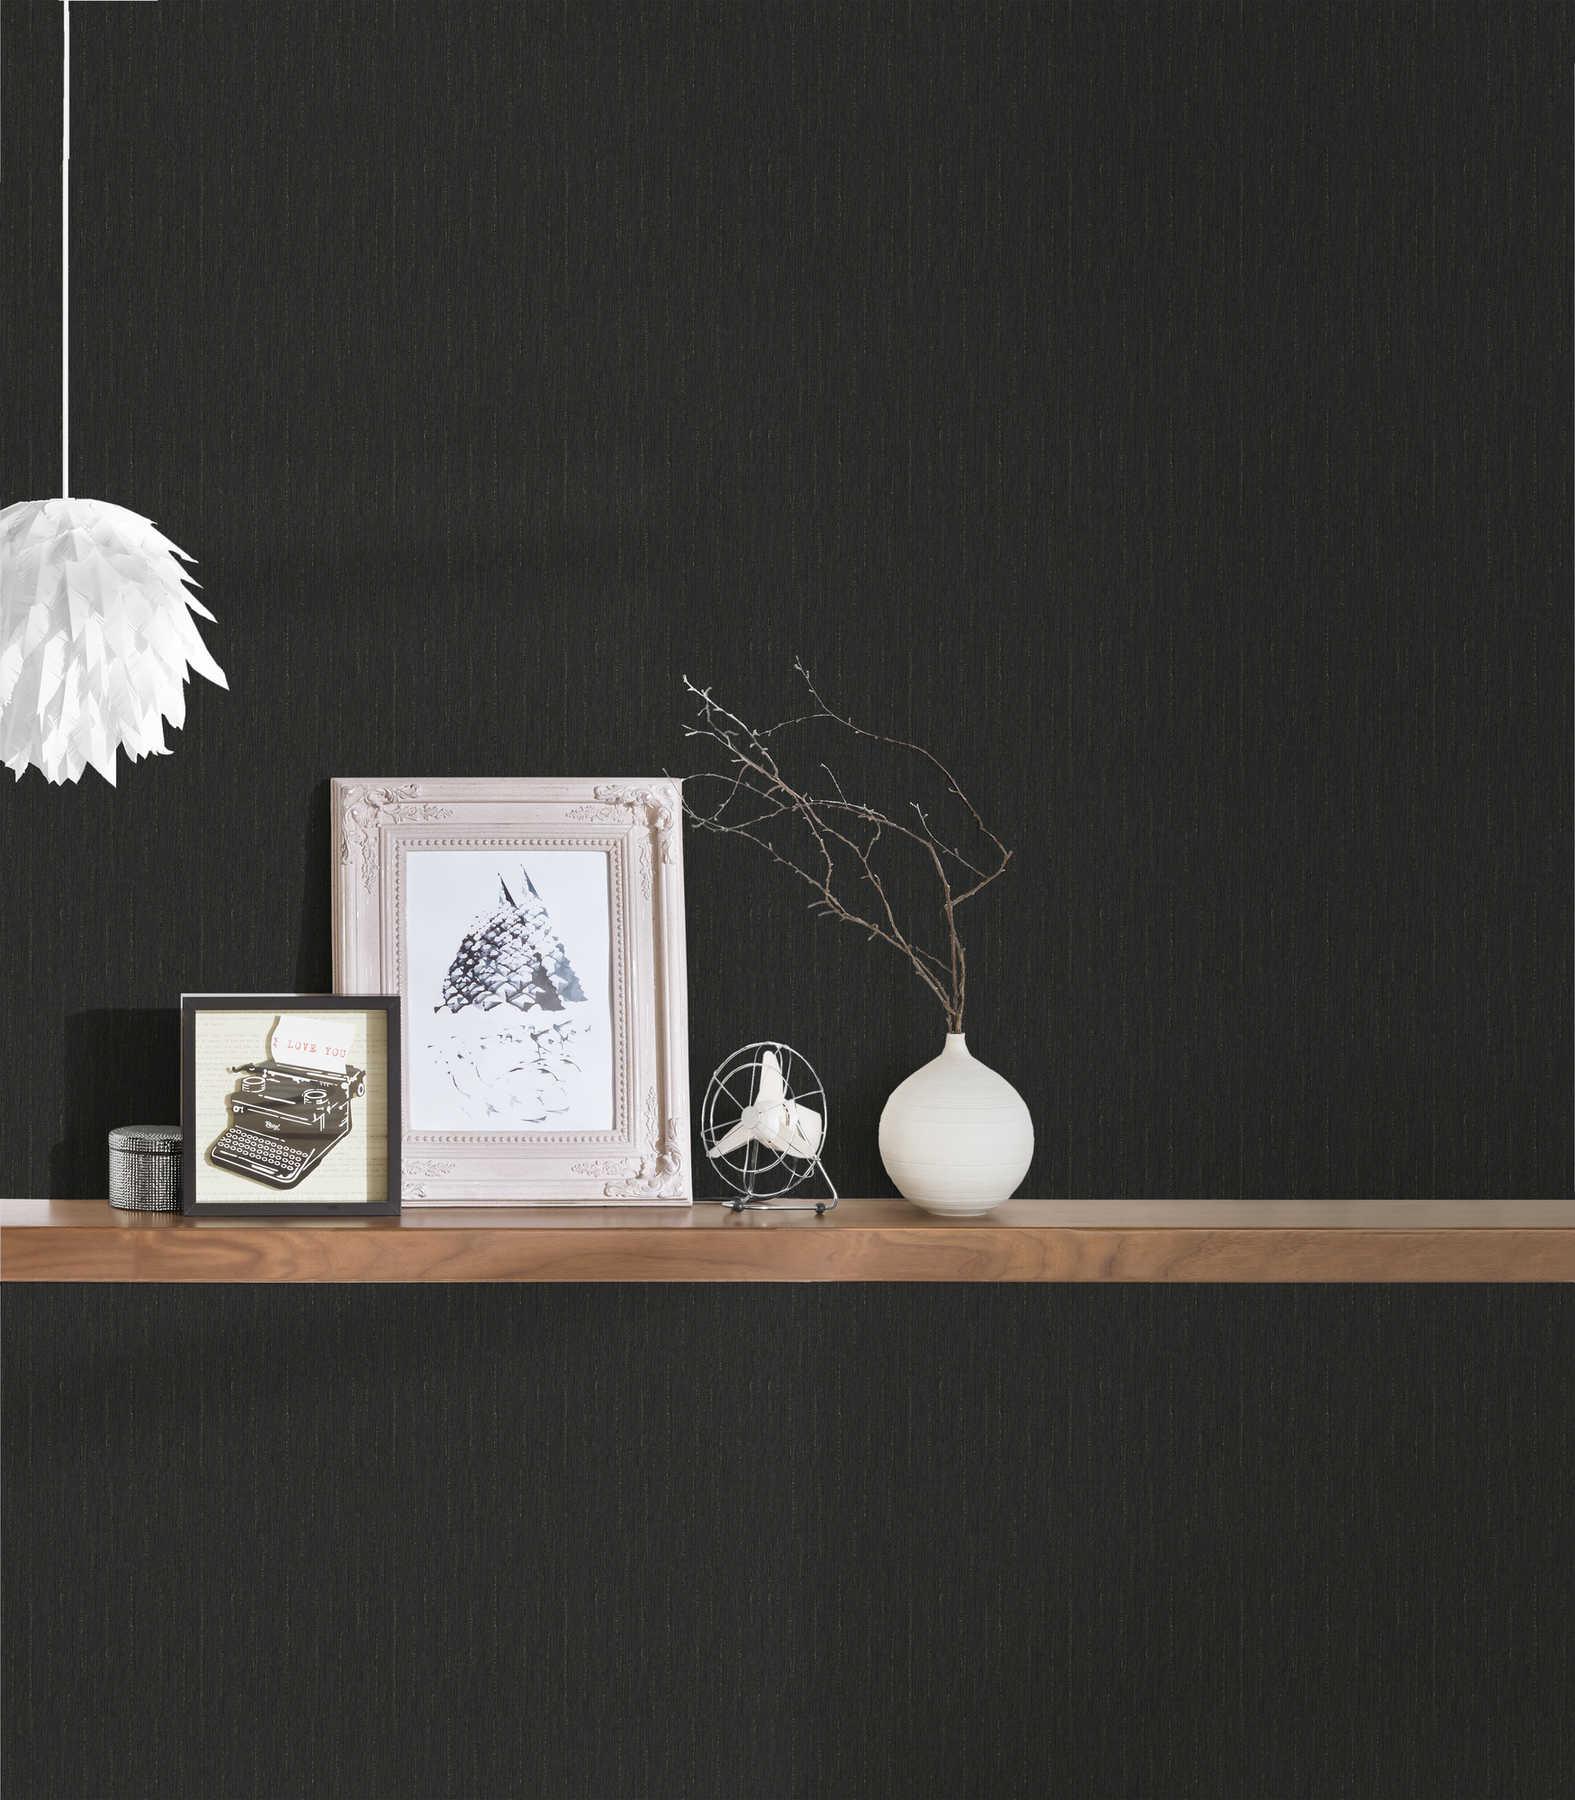             Black plain wallpaper with fine glitter threads - Black
        